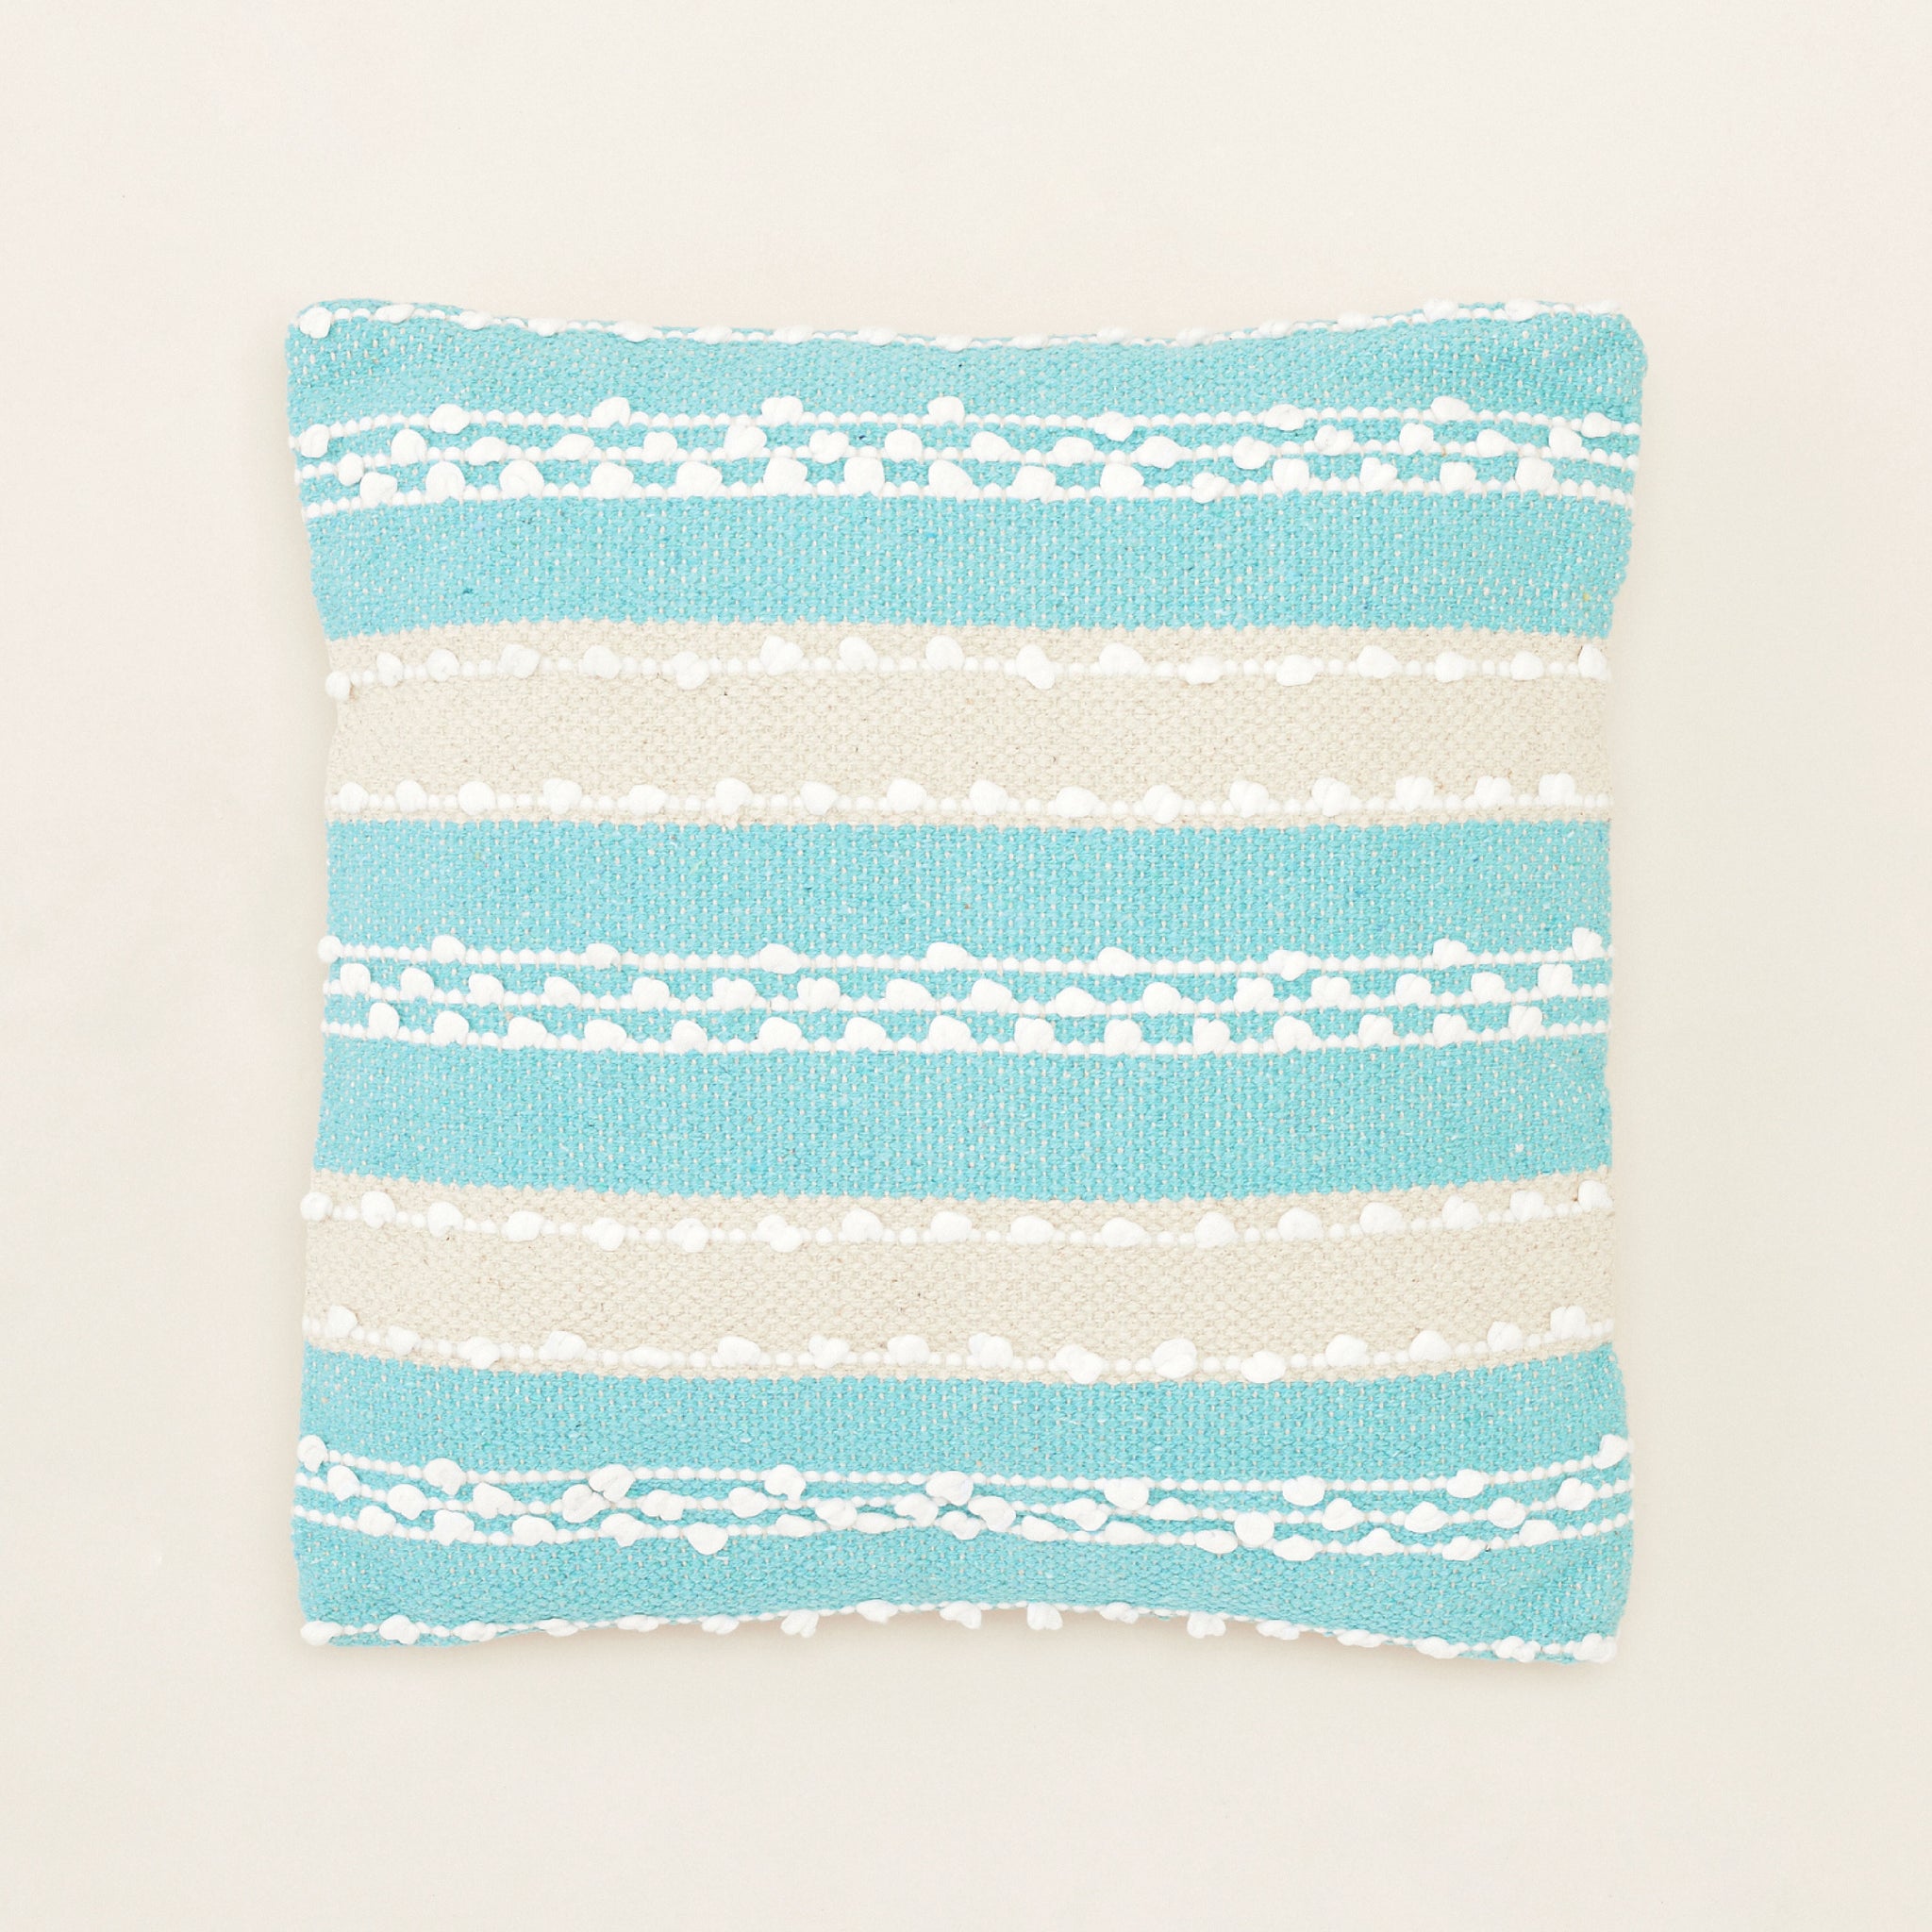 Stripes Hand-Woven Cushion | หมอนอิง ทอมือ